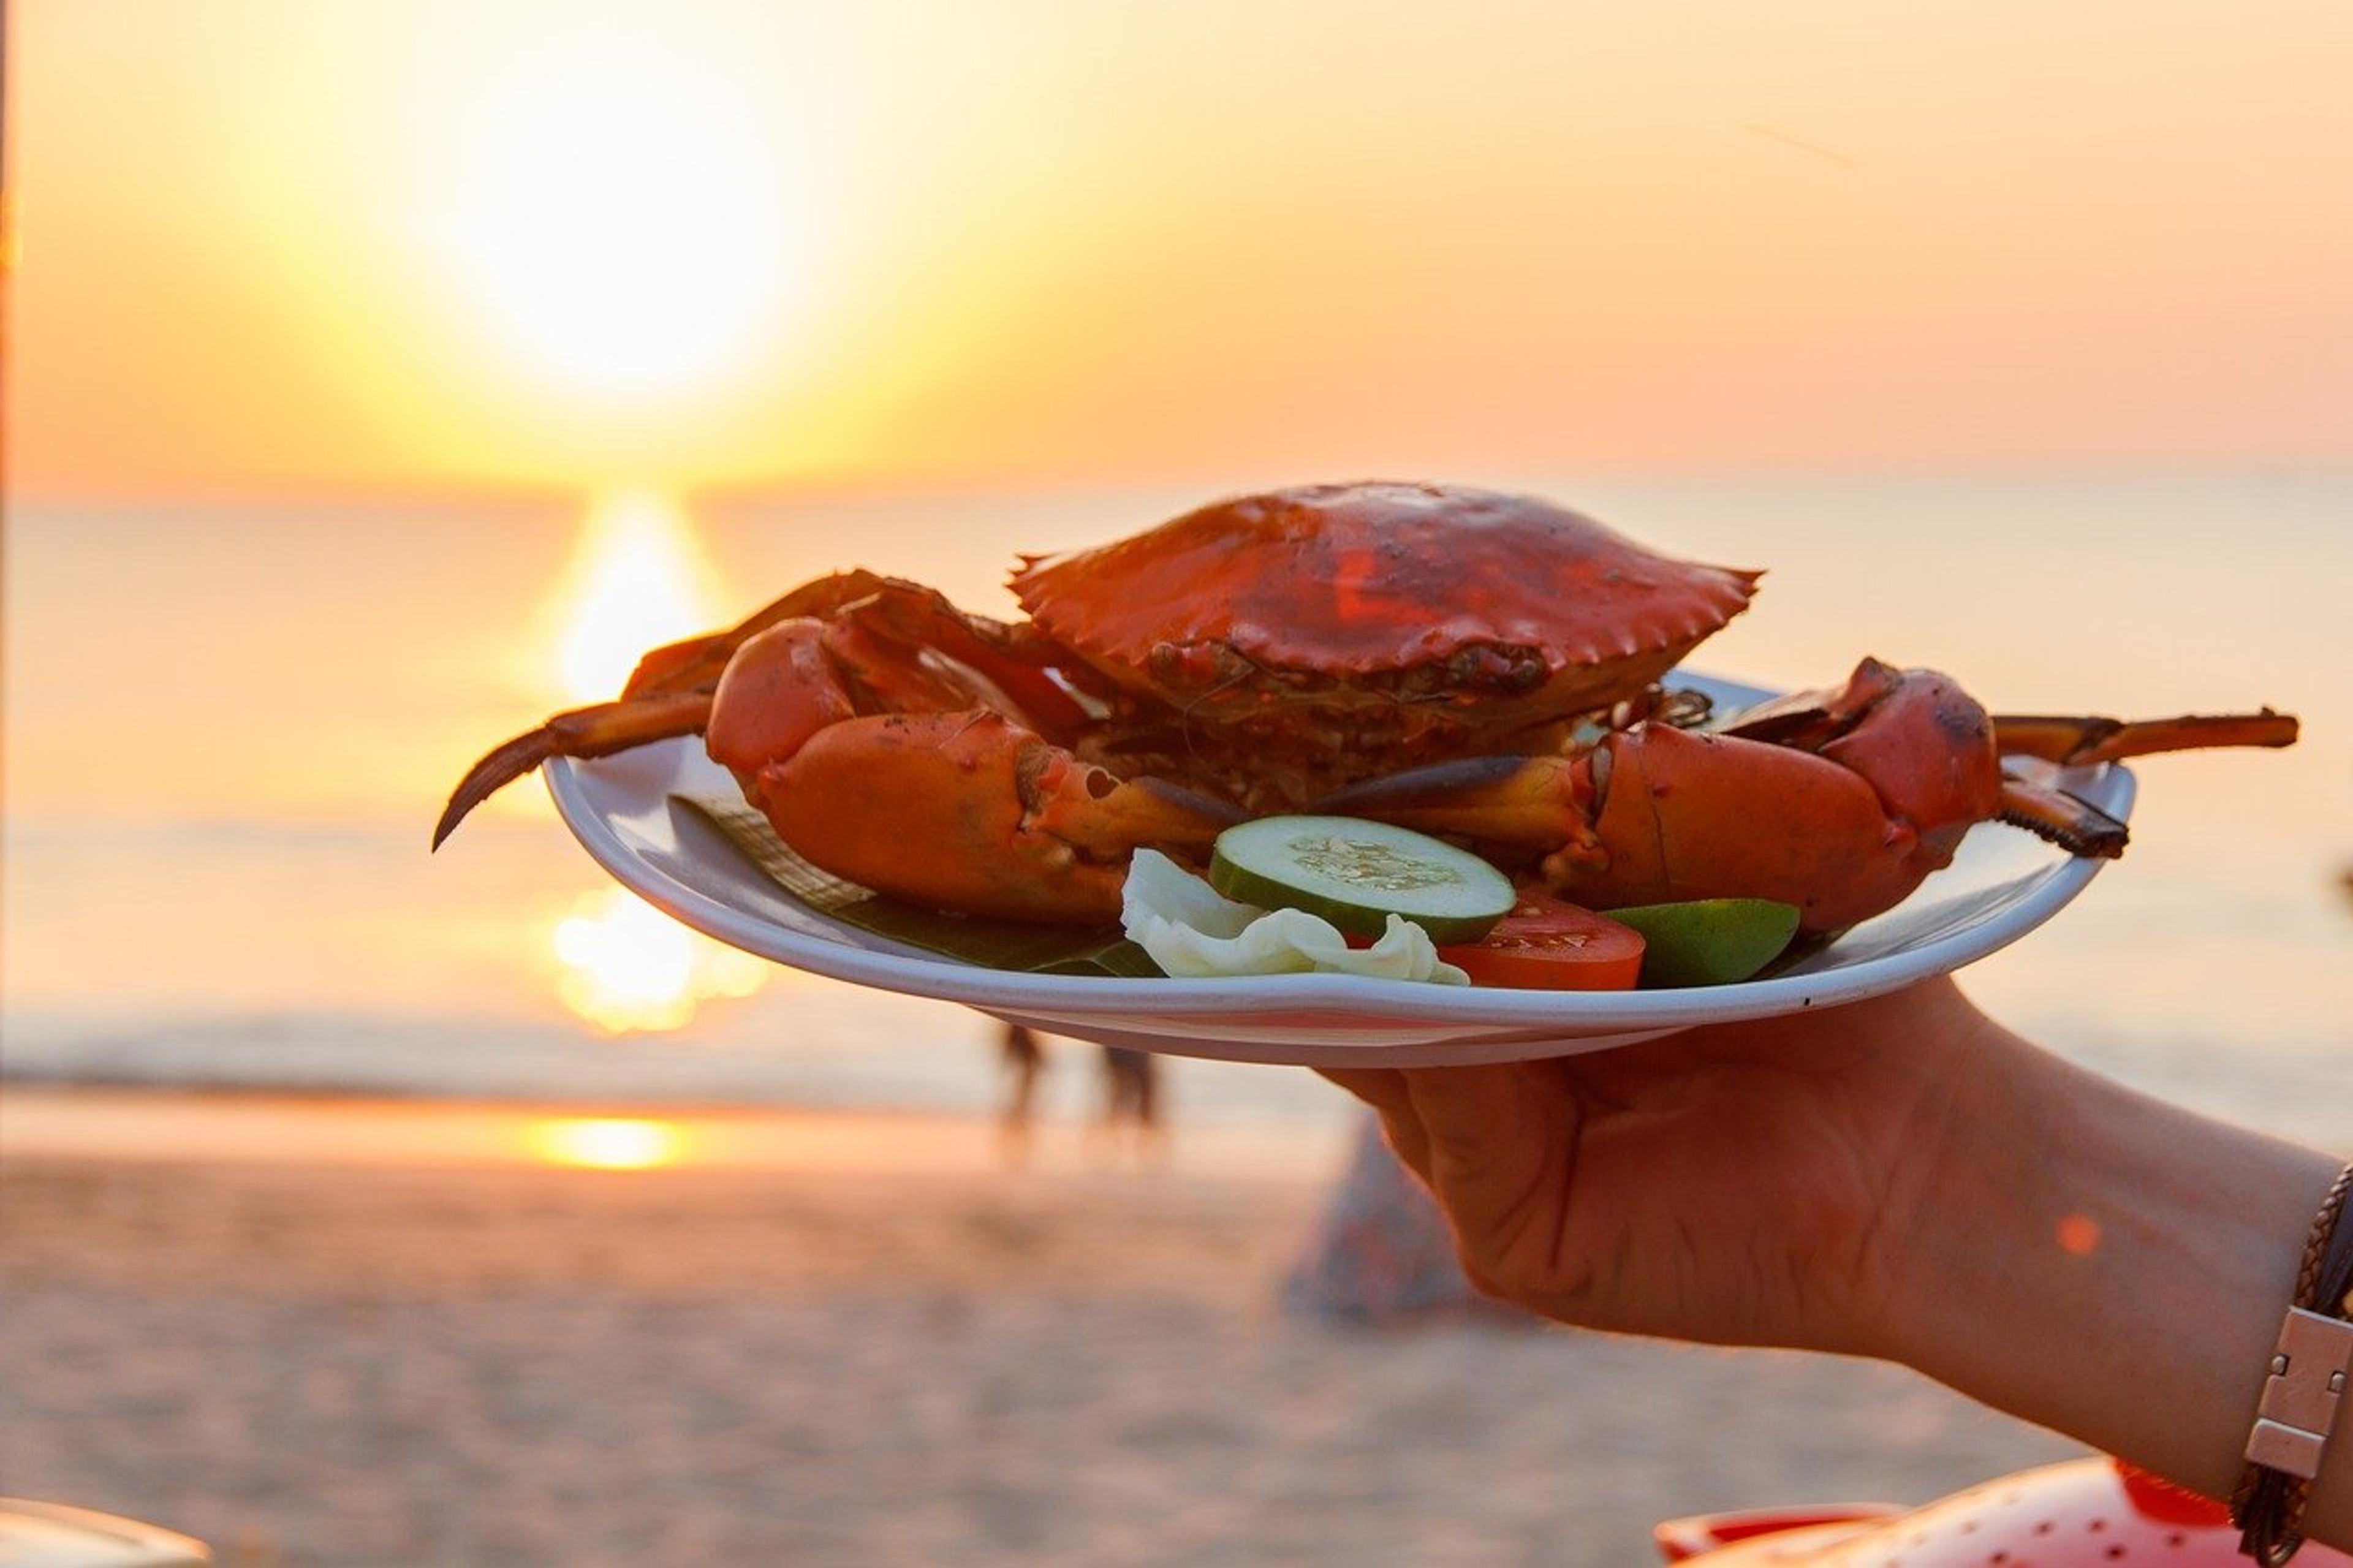 Tasting crab dish at the seaside during sunset